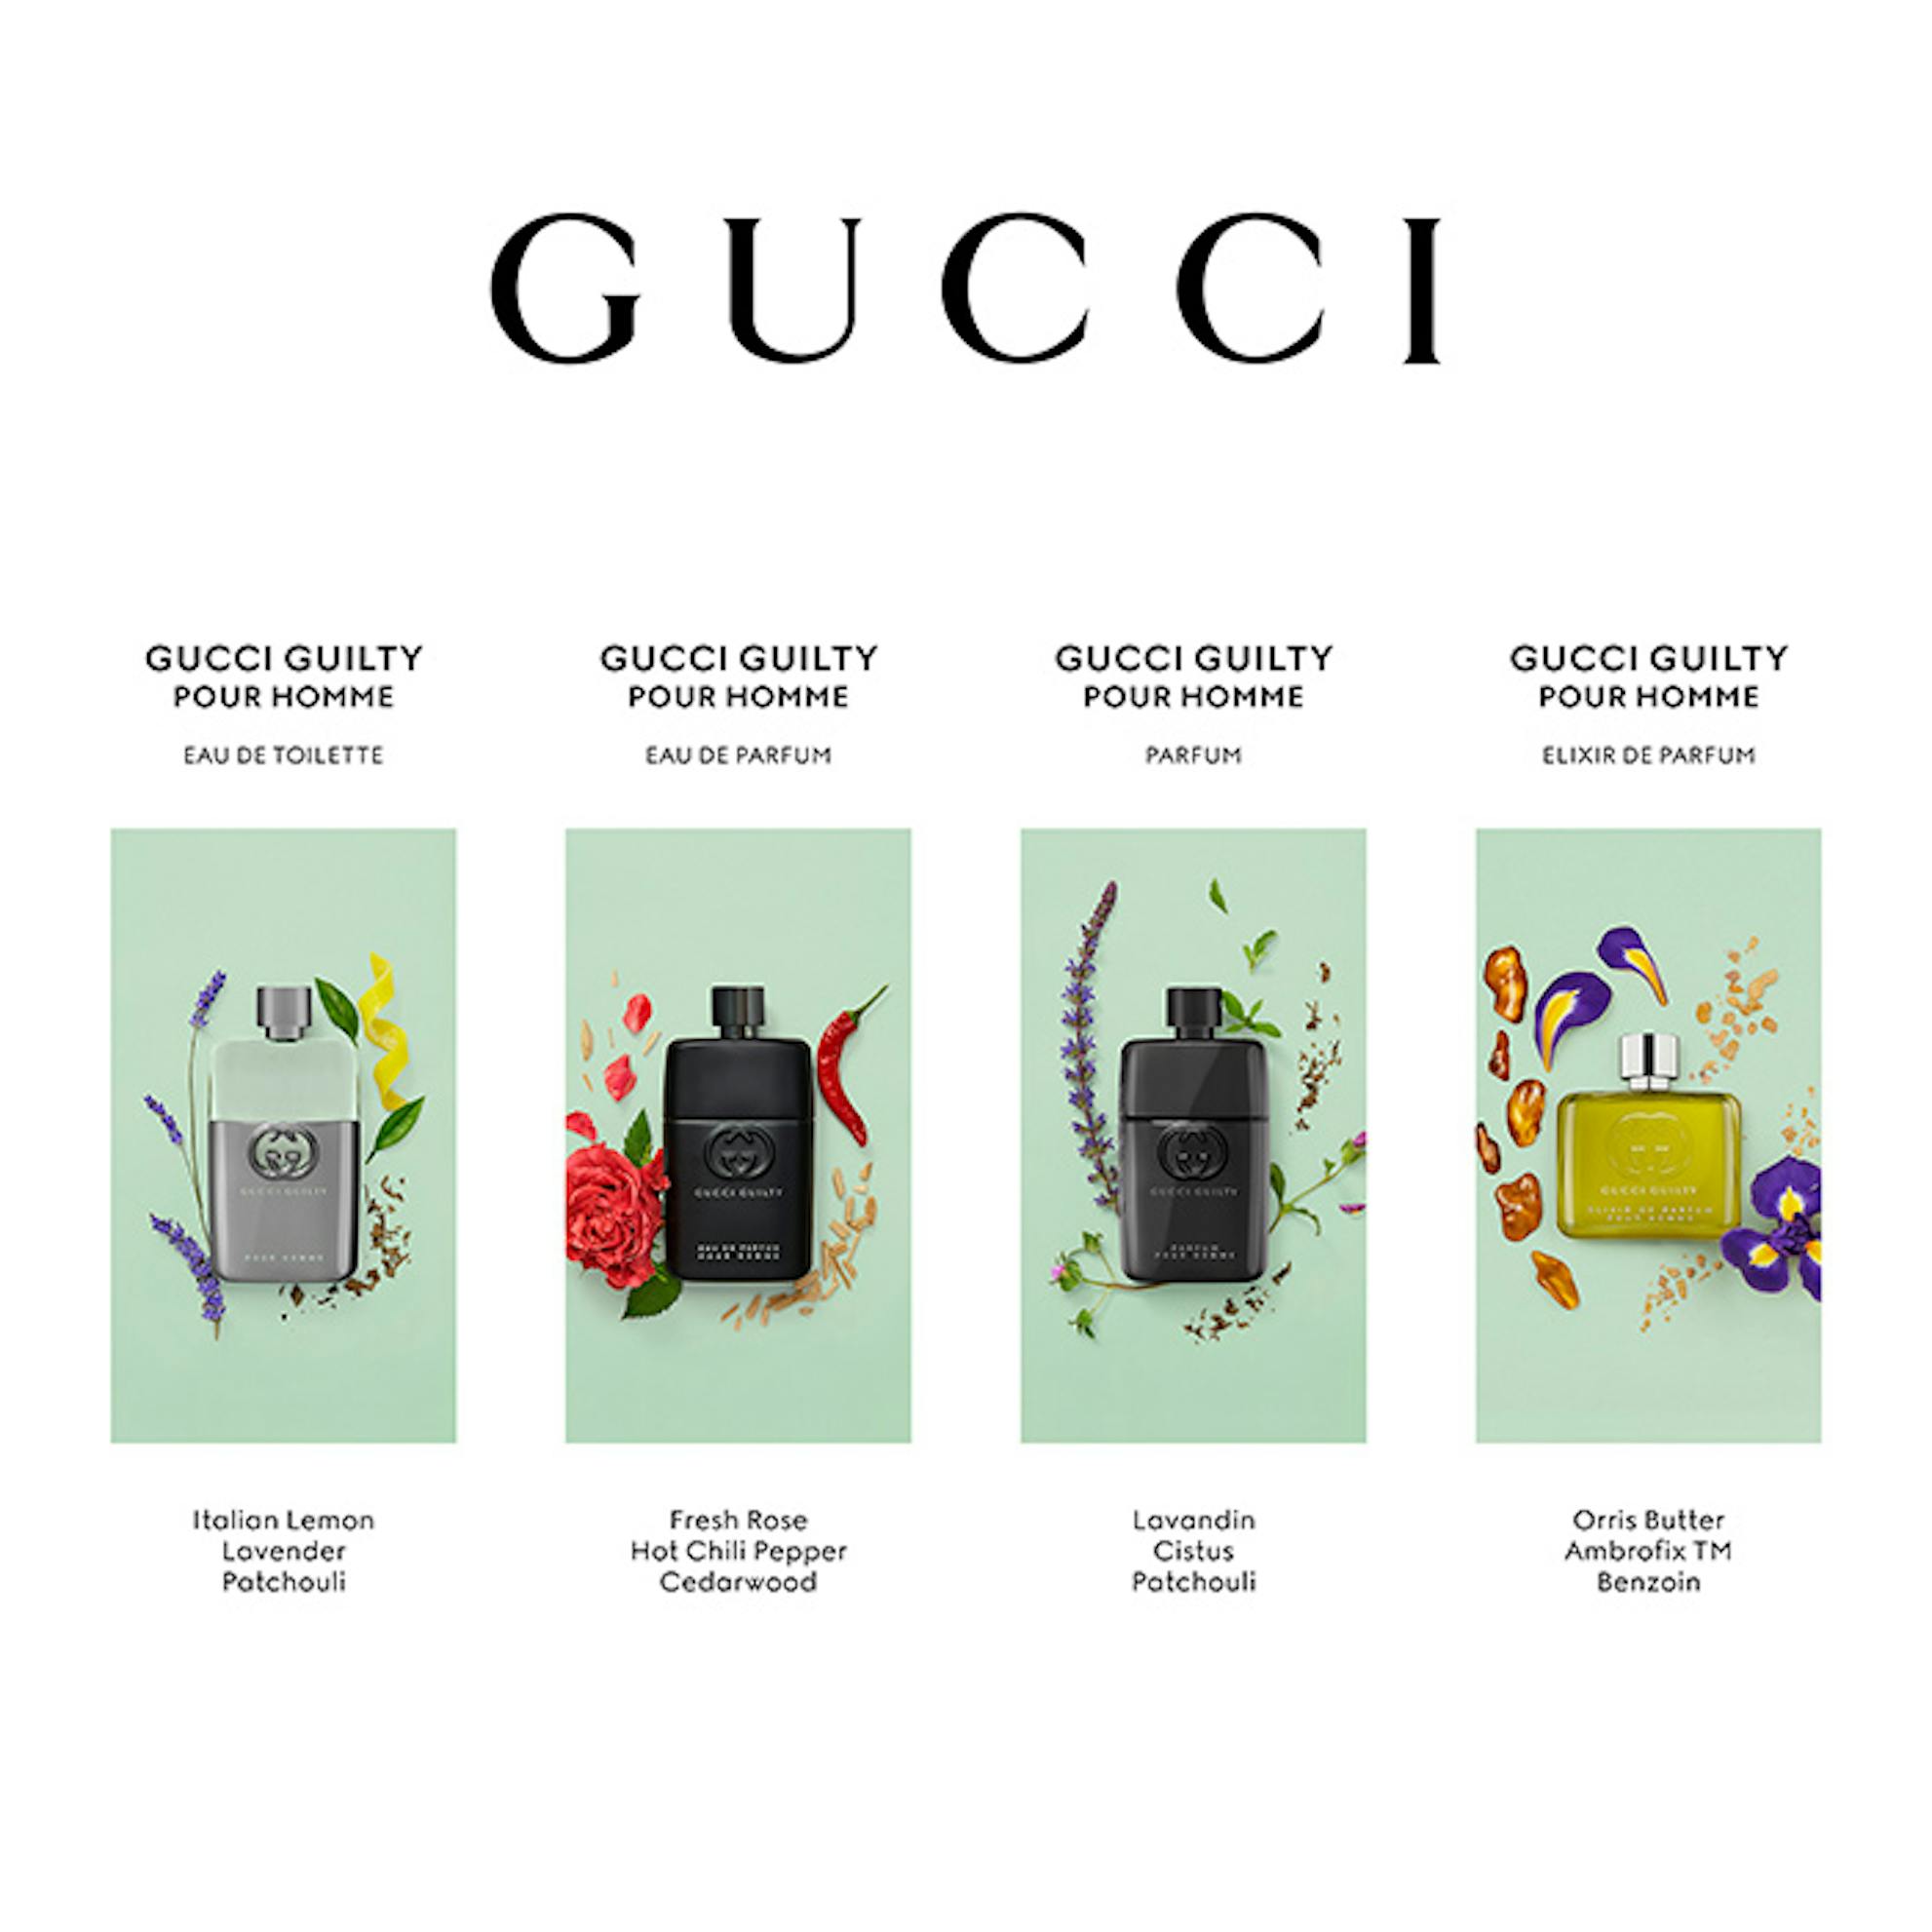 Gucci Gucci Guilty Elixir / Gucci Elixir de Parfum Spray Vial 0.05 oz (1.5  ml) (W) 3616304175961 - Fragrances & Beauty, Guilty Elixir De Parfum -  Jomashop